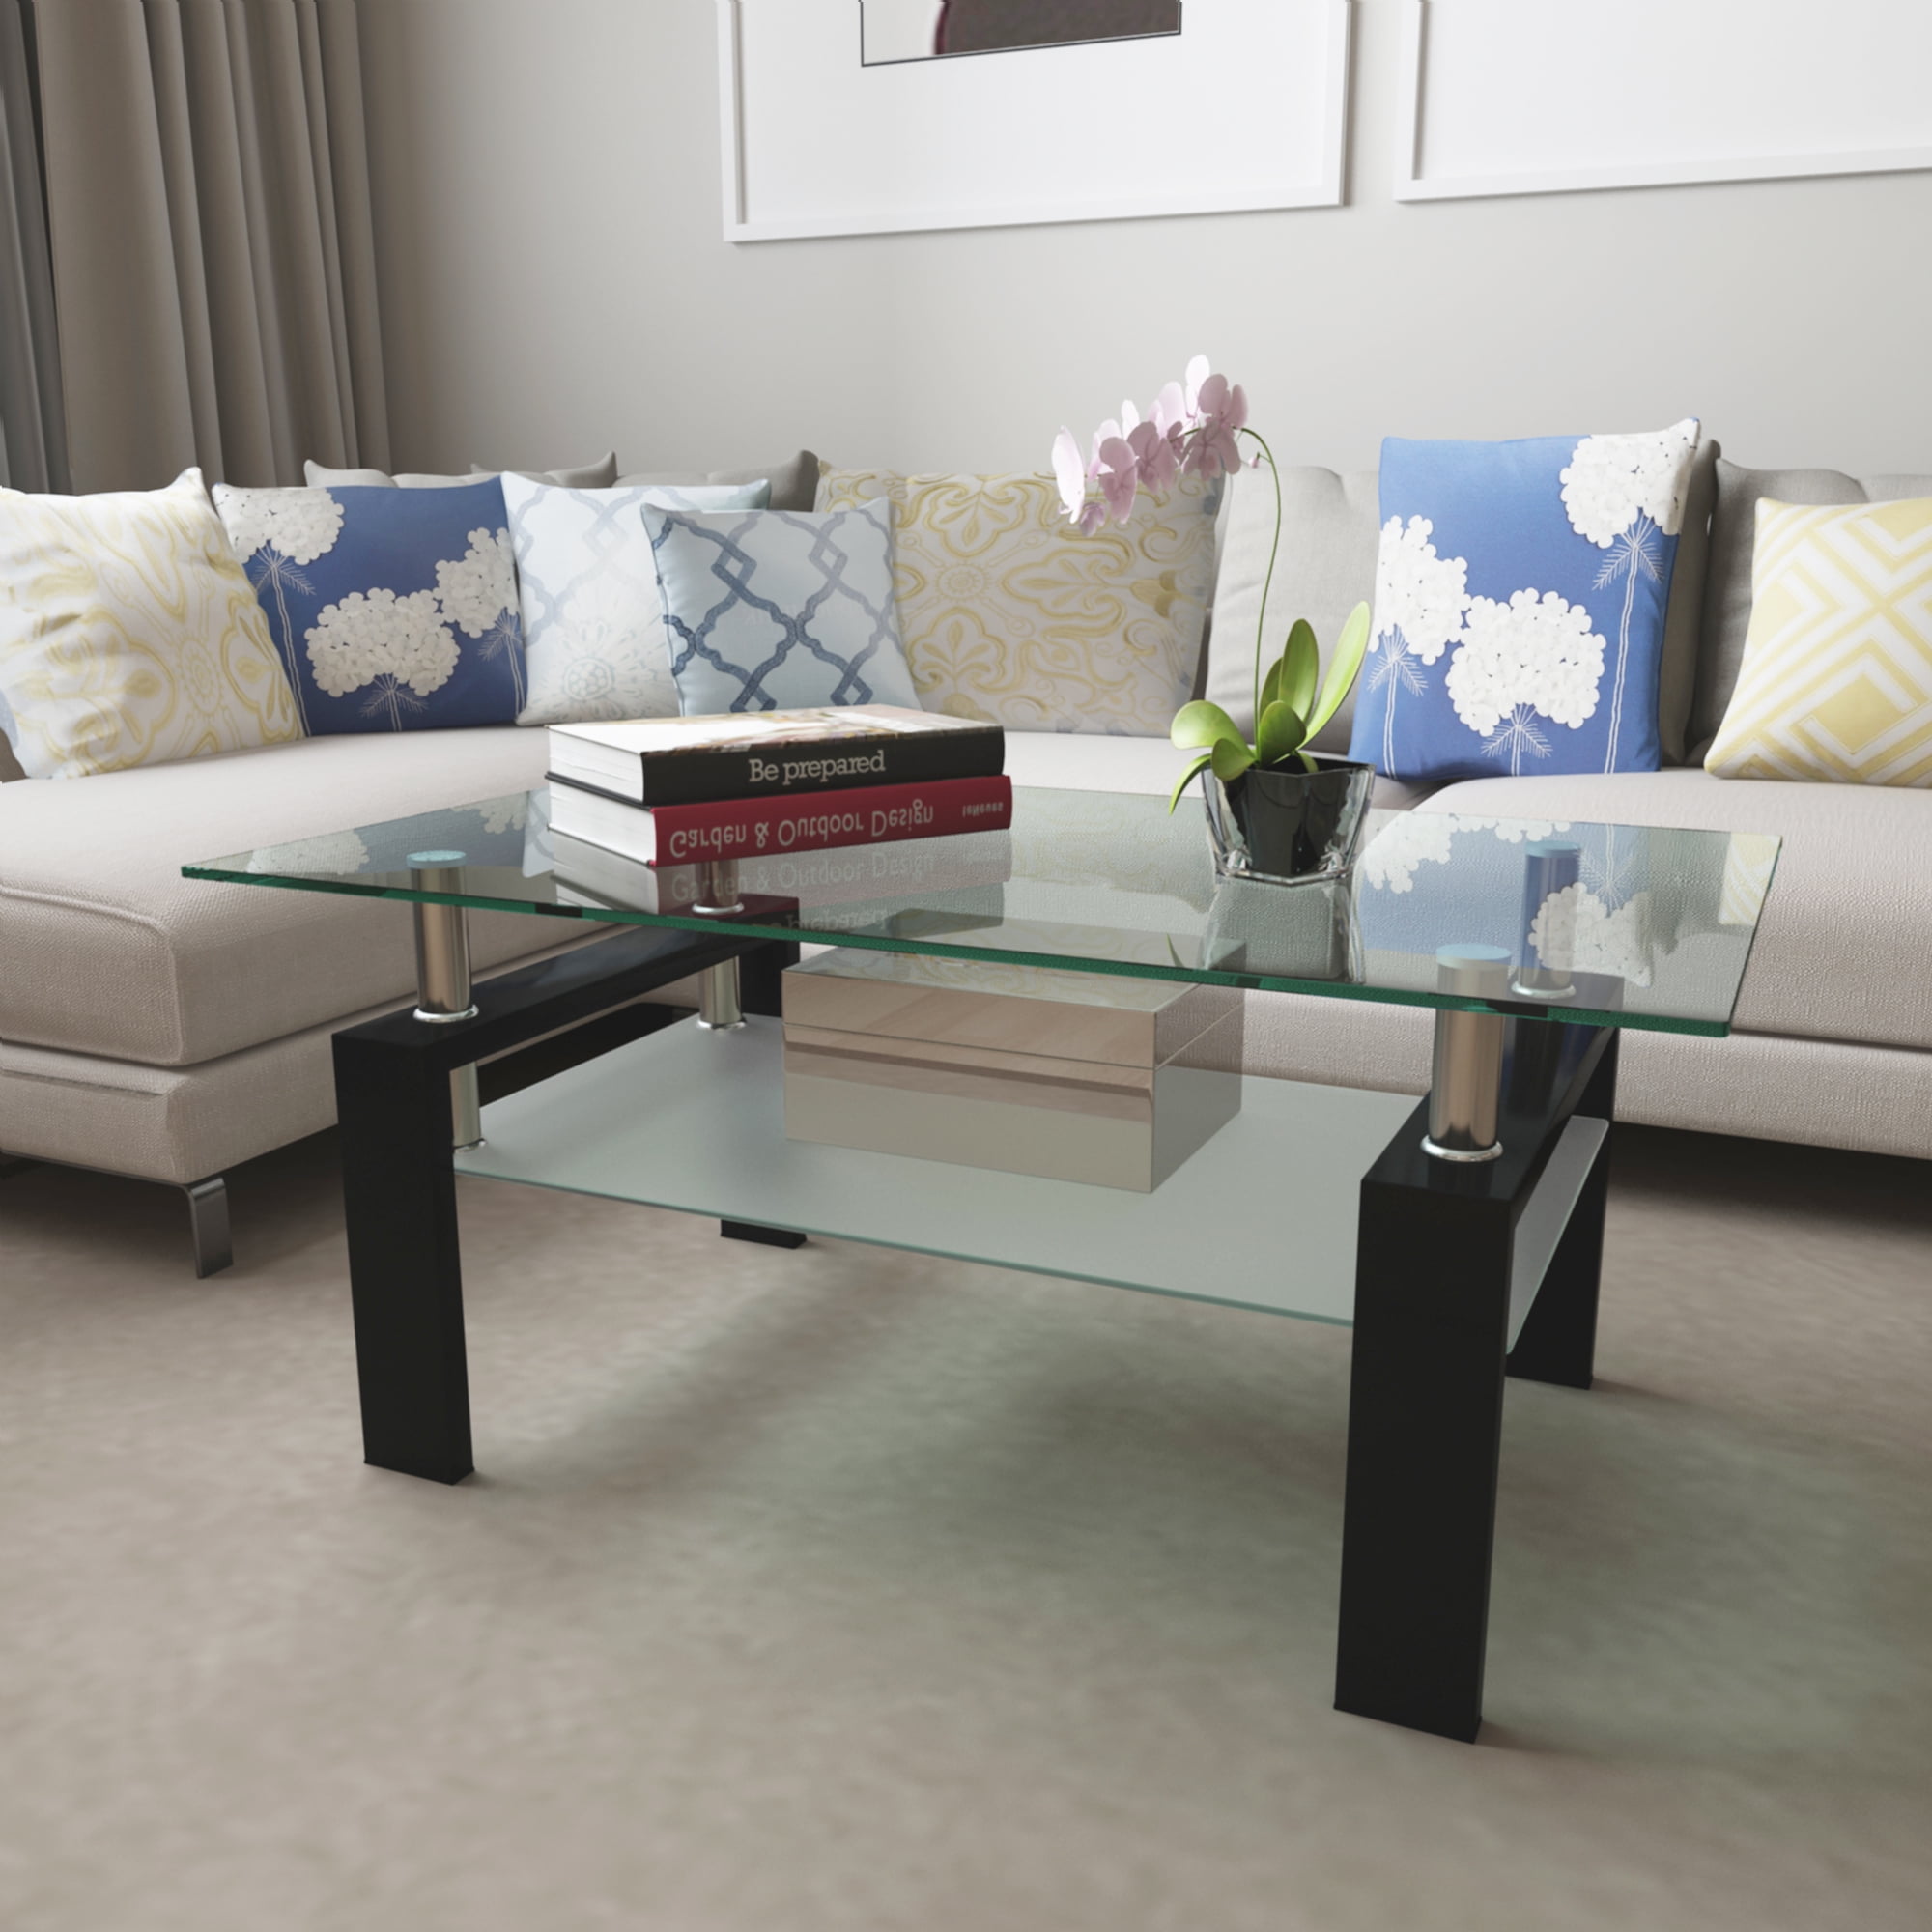 Details about   Rectangular Transparent Glass Coffee Table Shelf Wood LivingRoom Furniture Black 